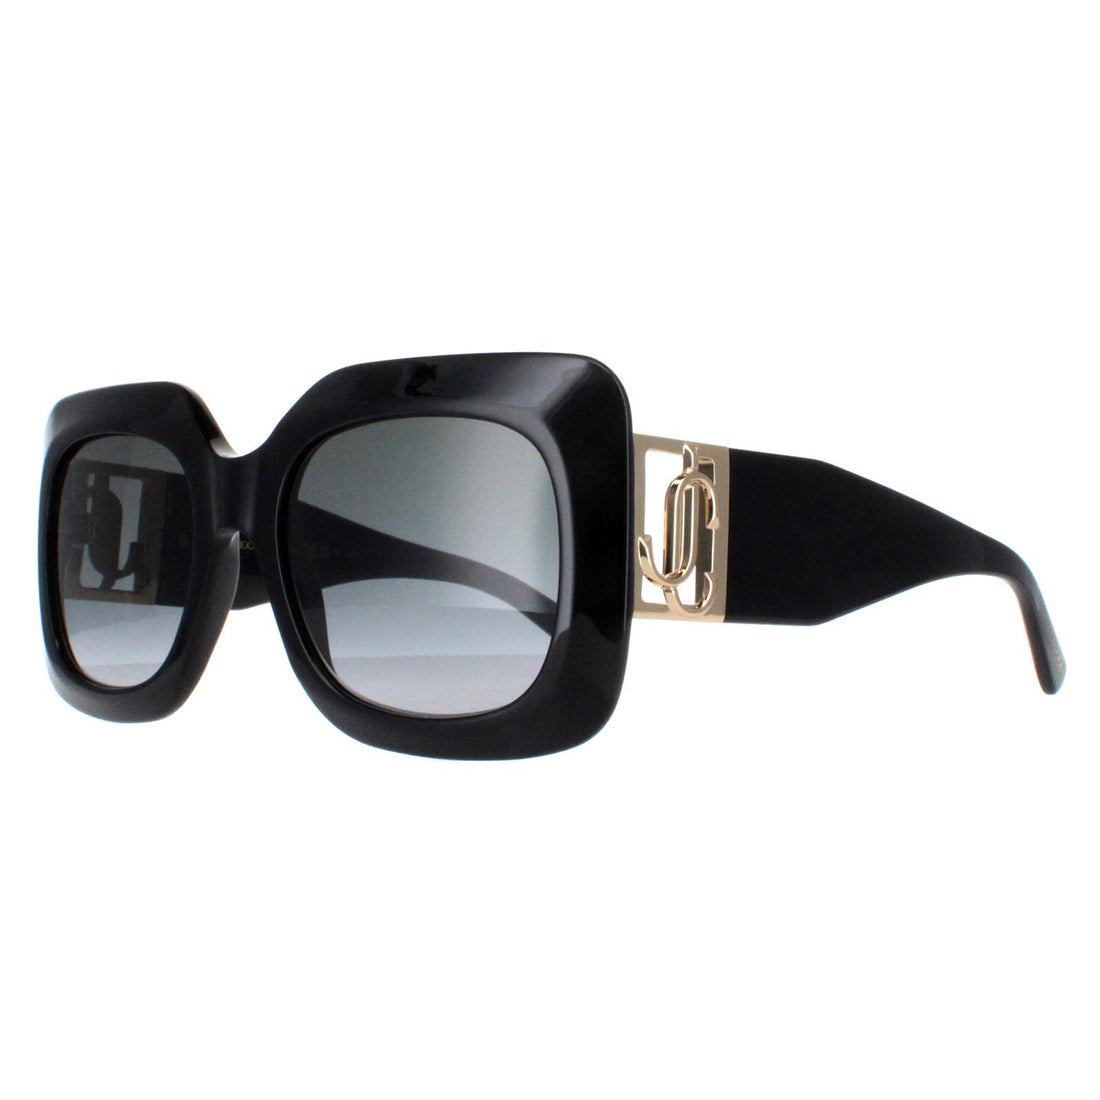 Jimmy Choo Sunglasses GAYA/S 807 9O Black Grey Gradient